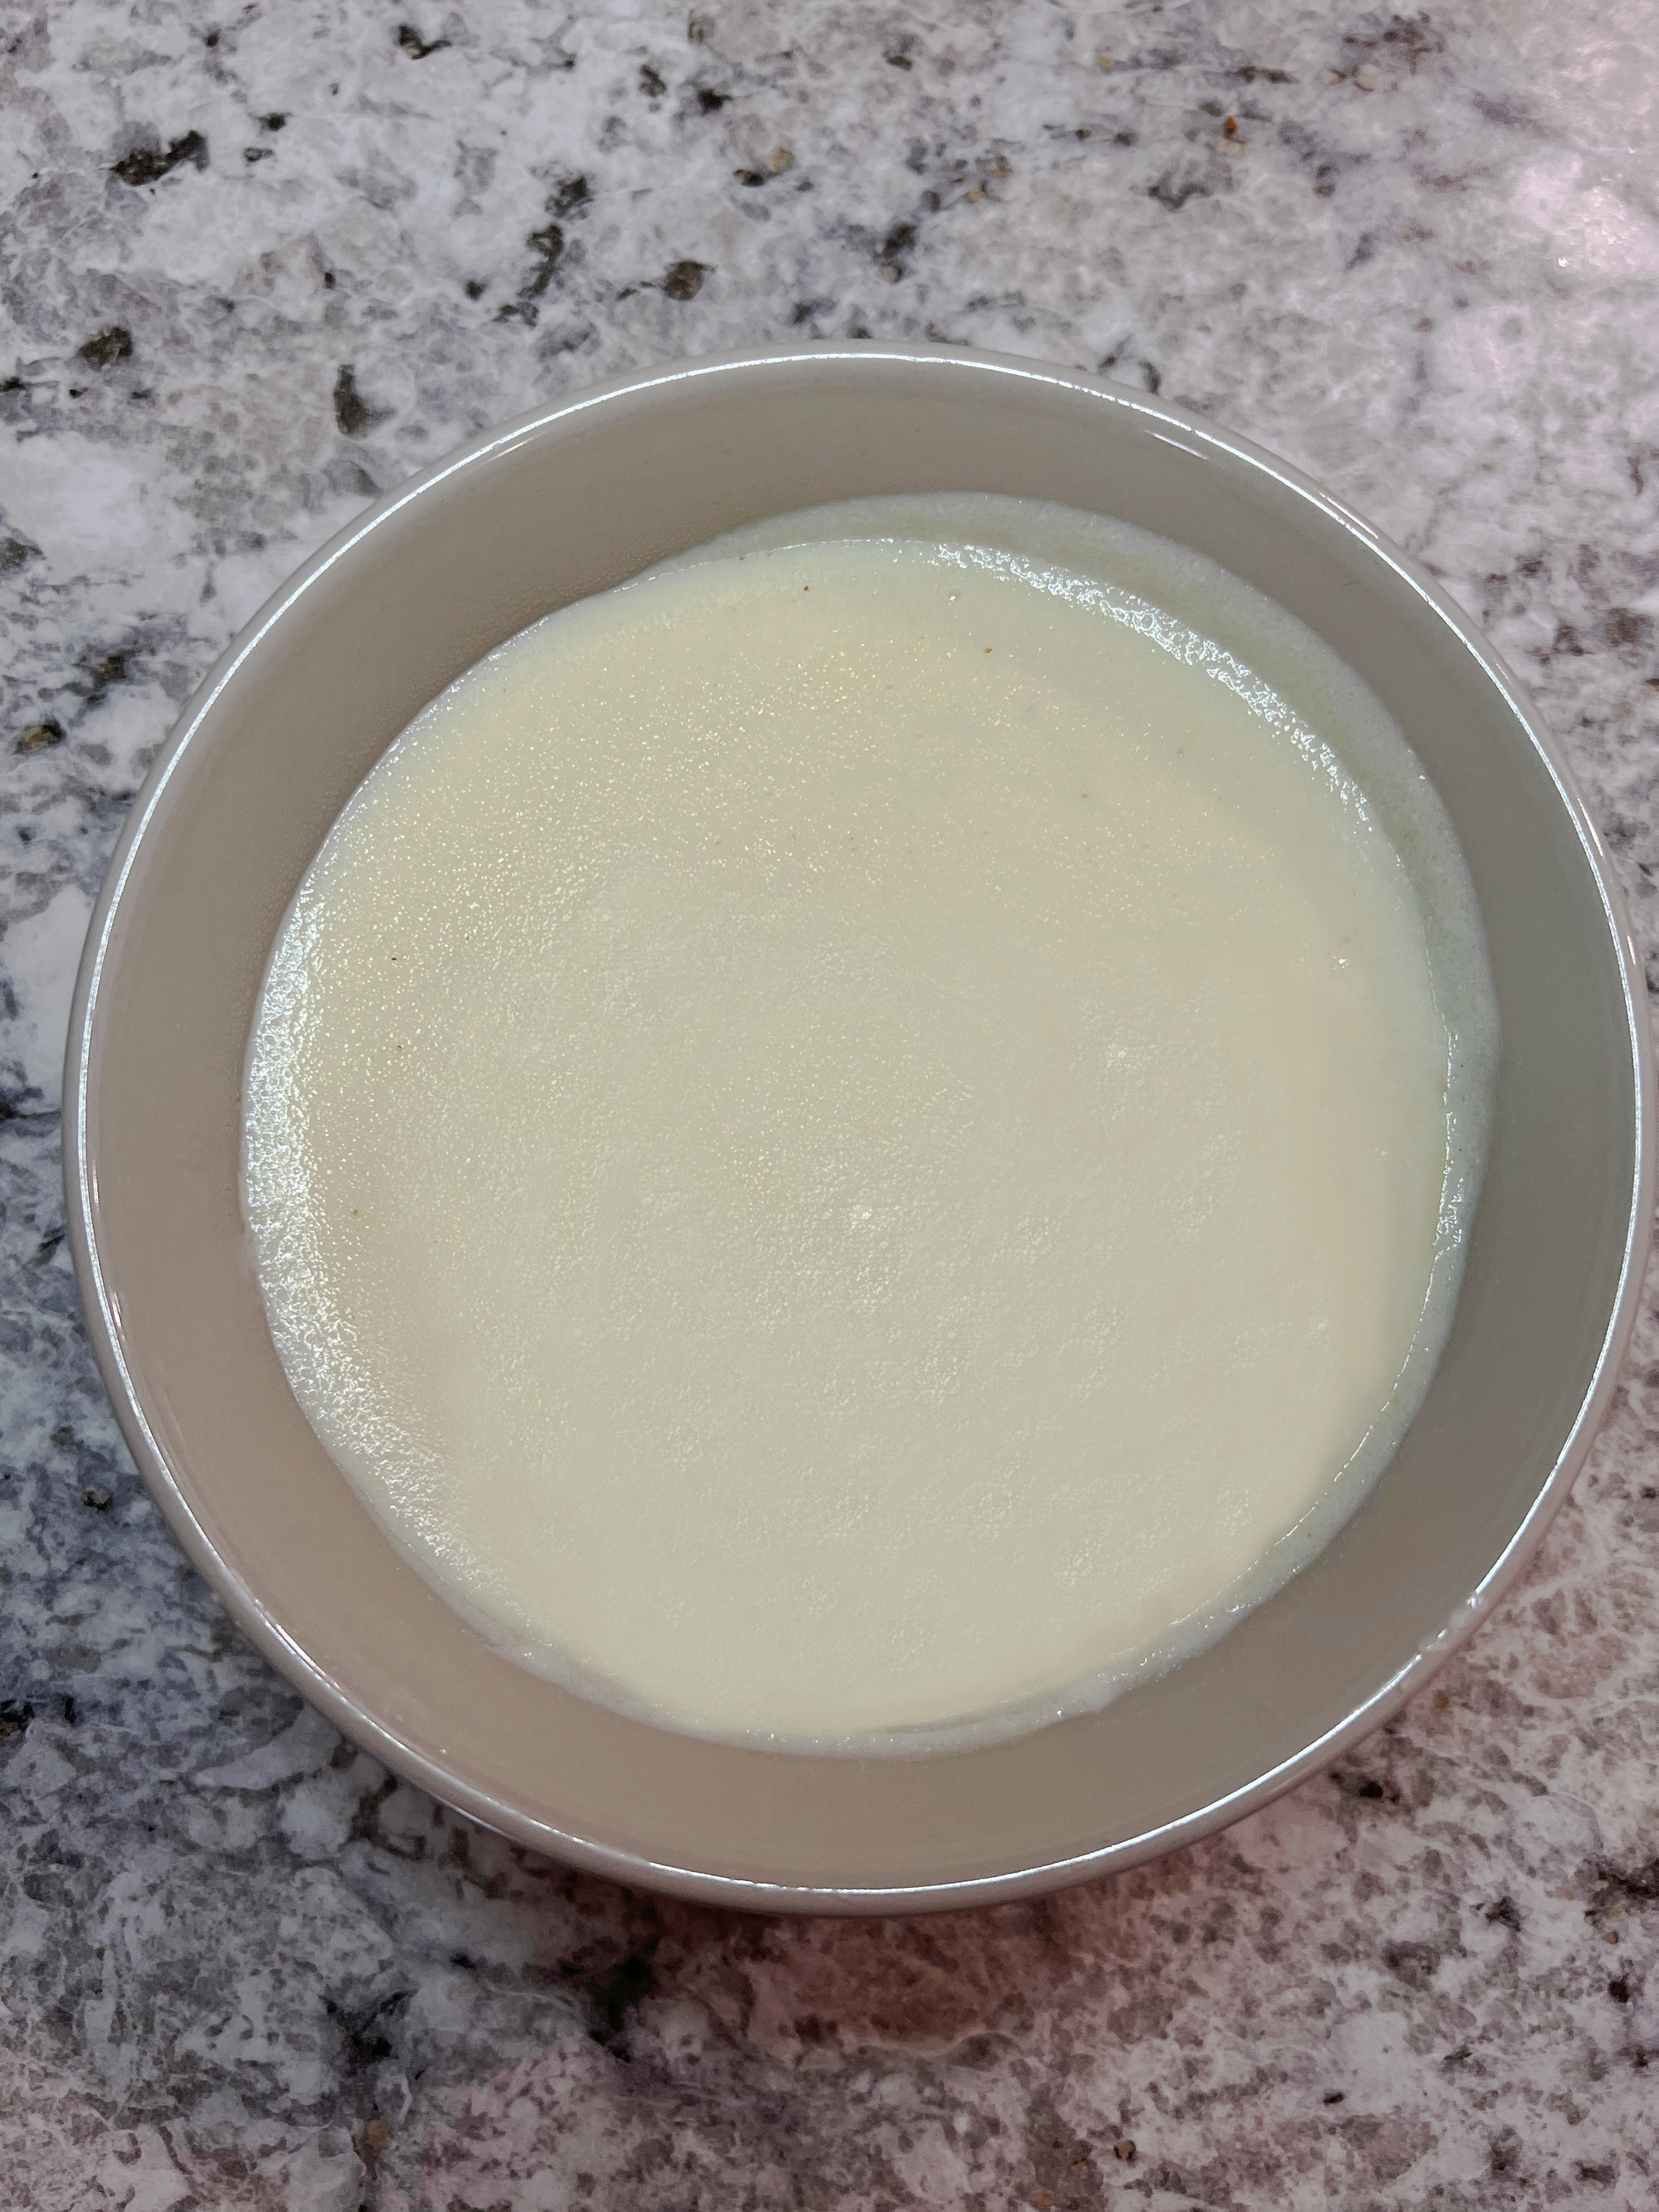 Jamaican Cornmeal Porridge